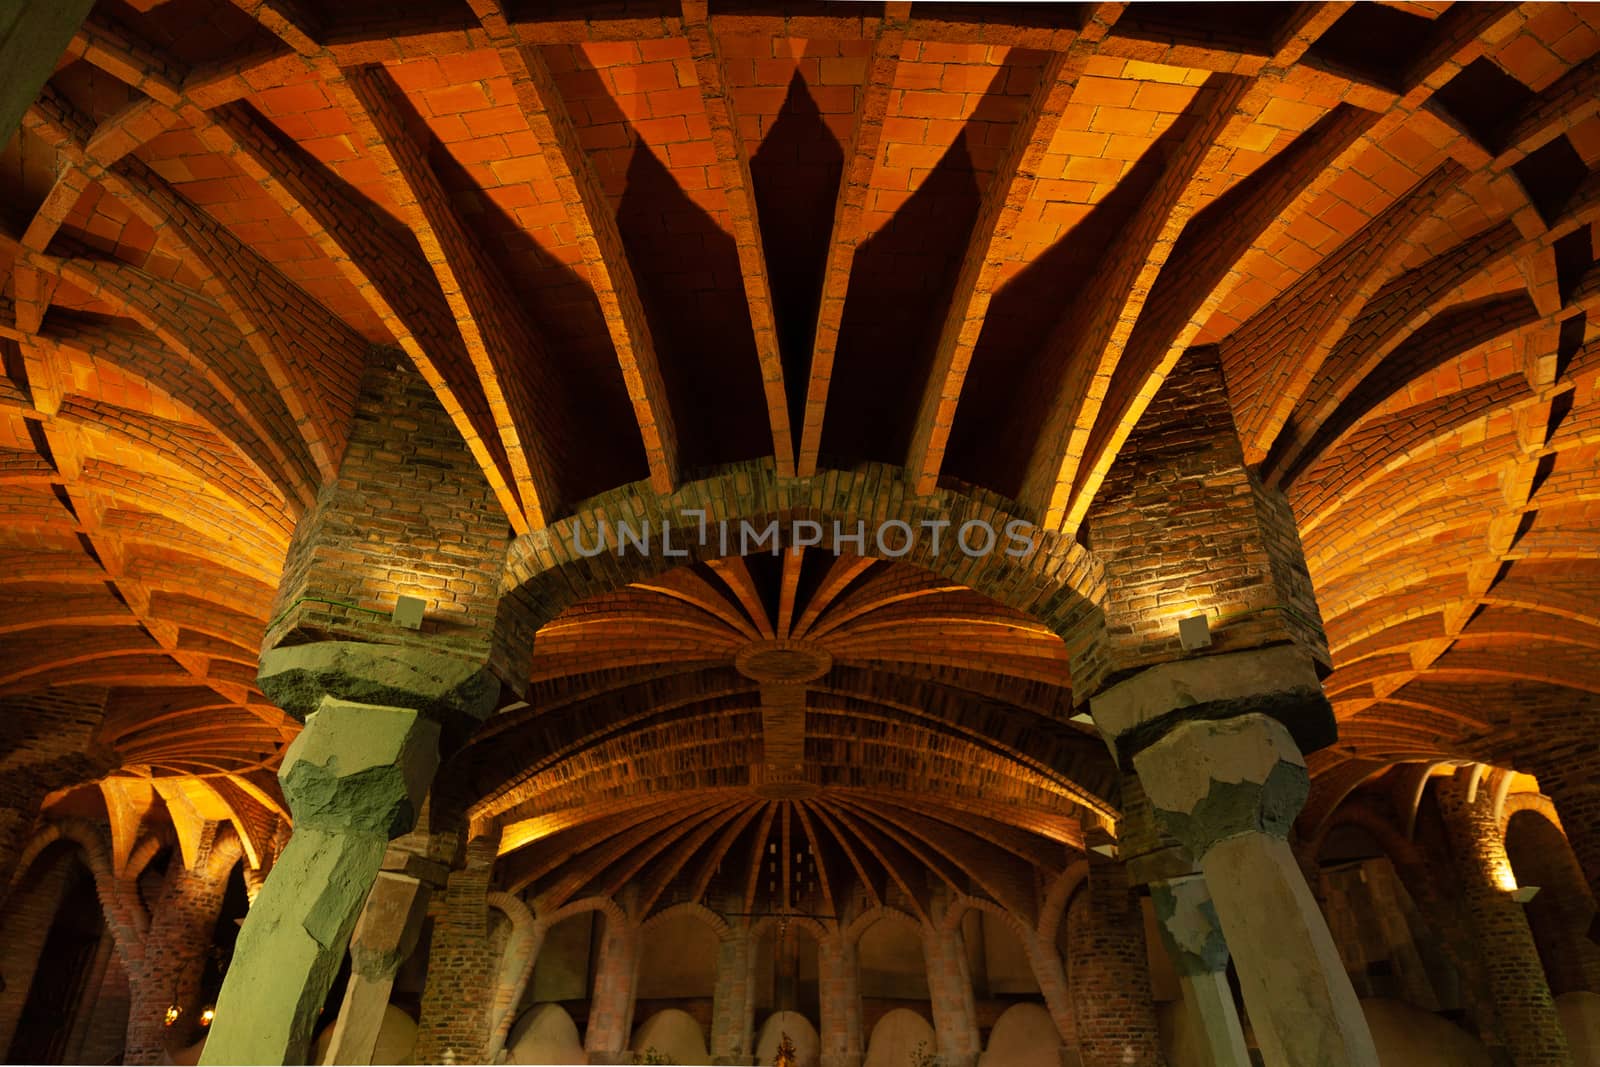 Santa Coloma de Cervello, Spain - 15 January 2019: Church of Colonia Guel interior ceiling and columns